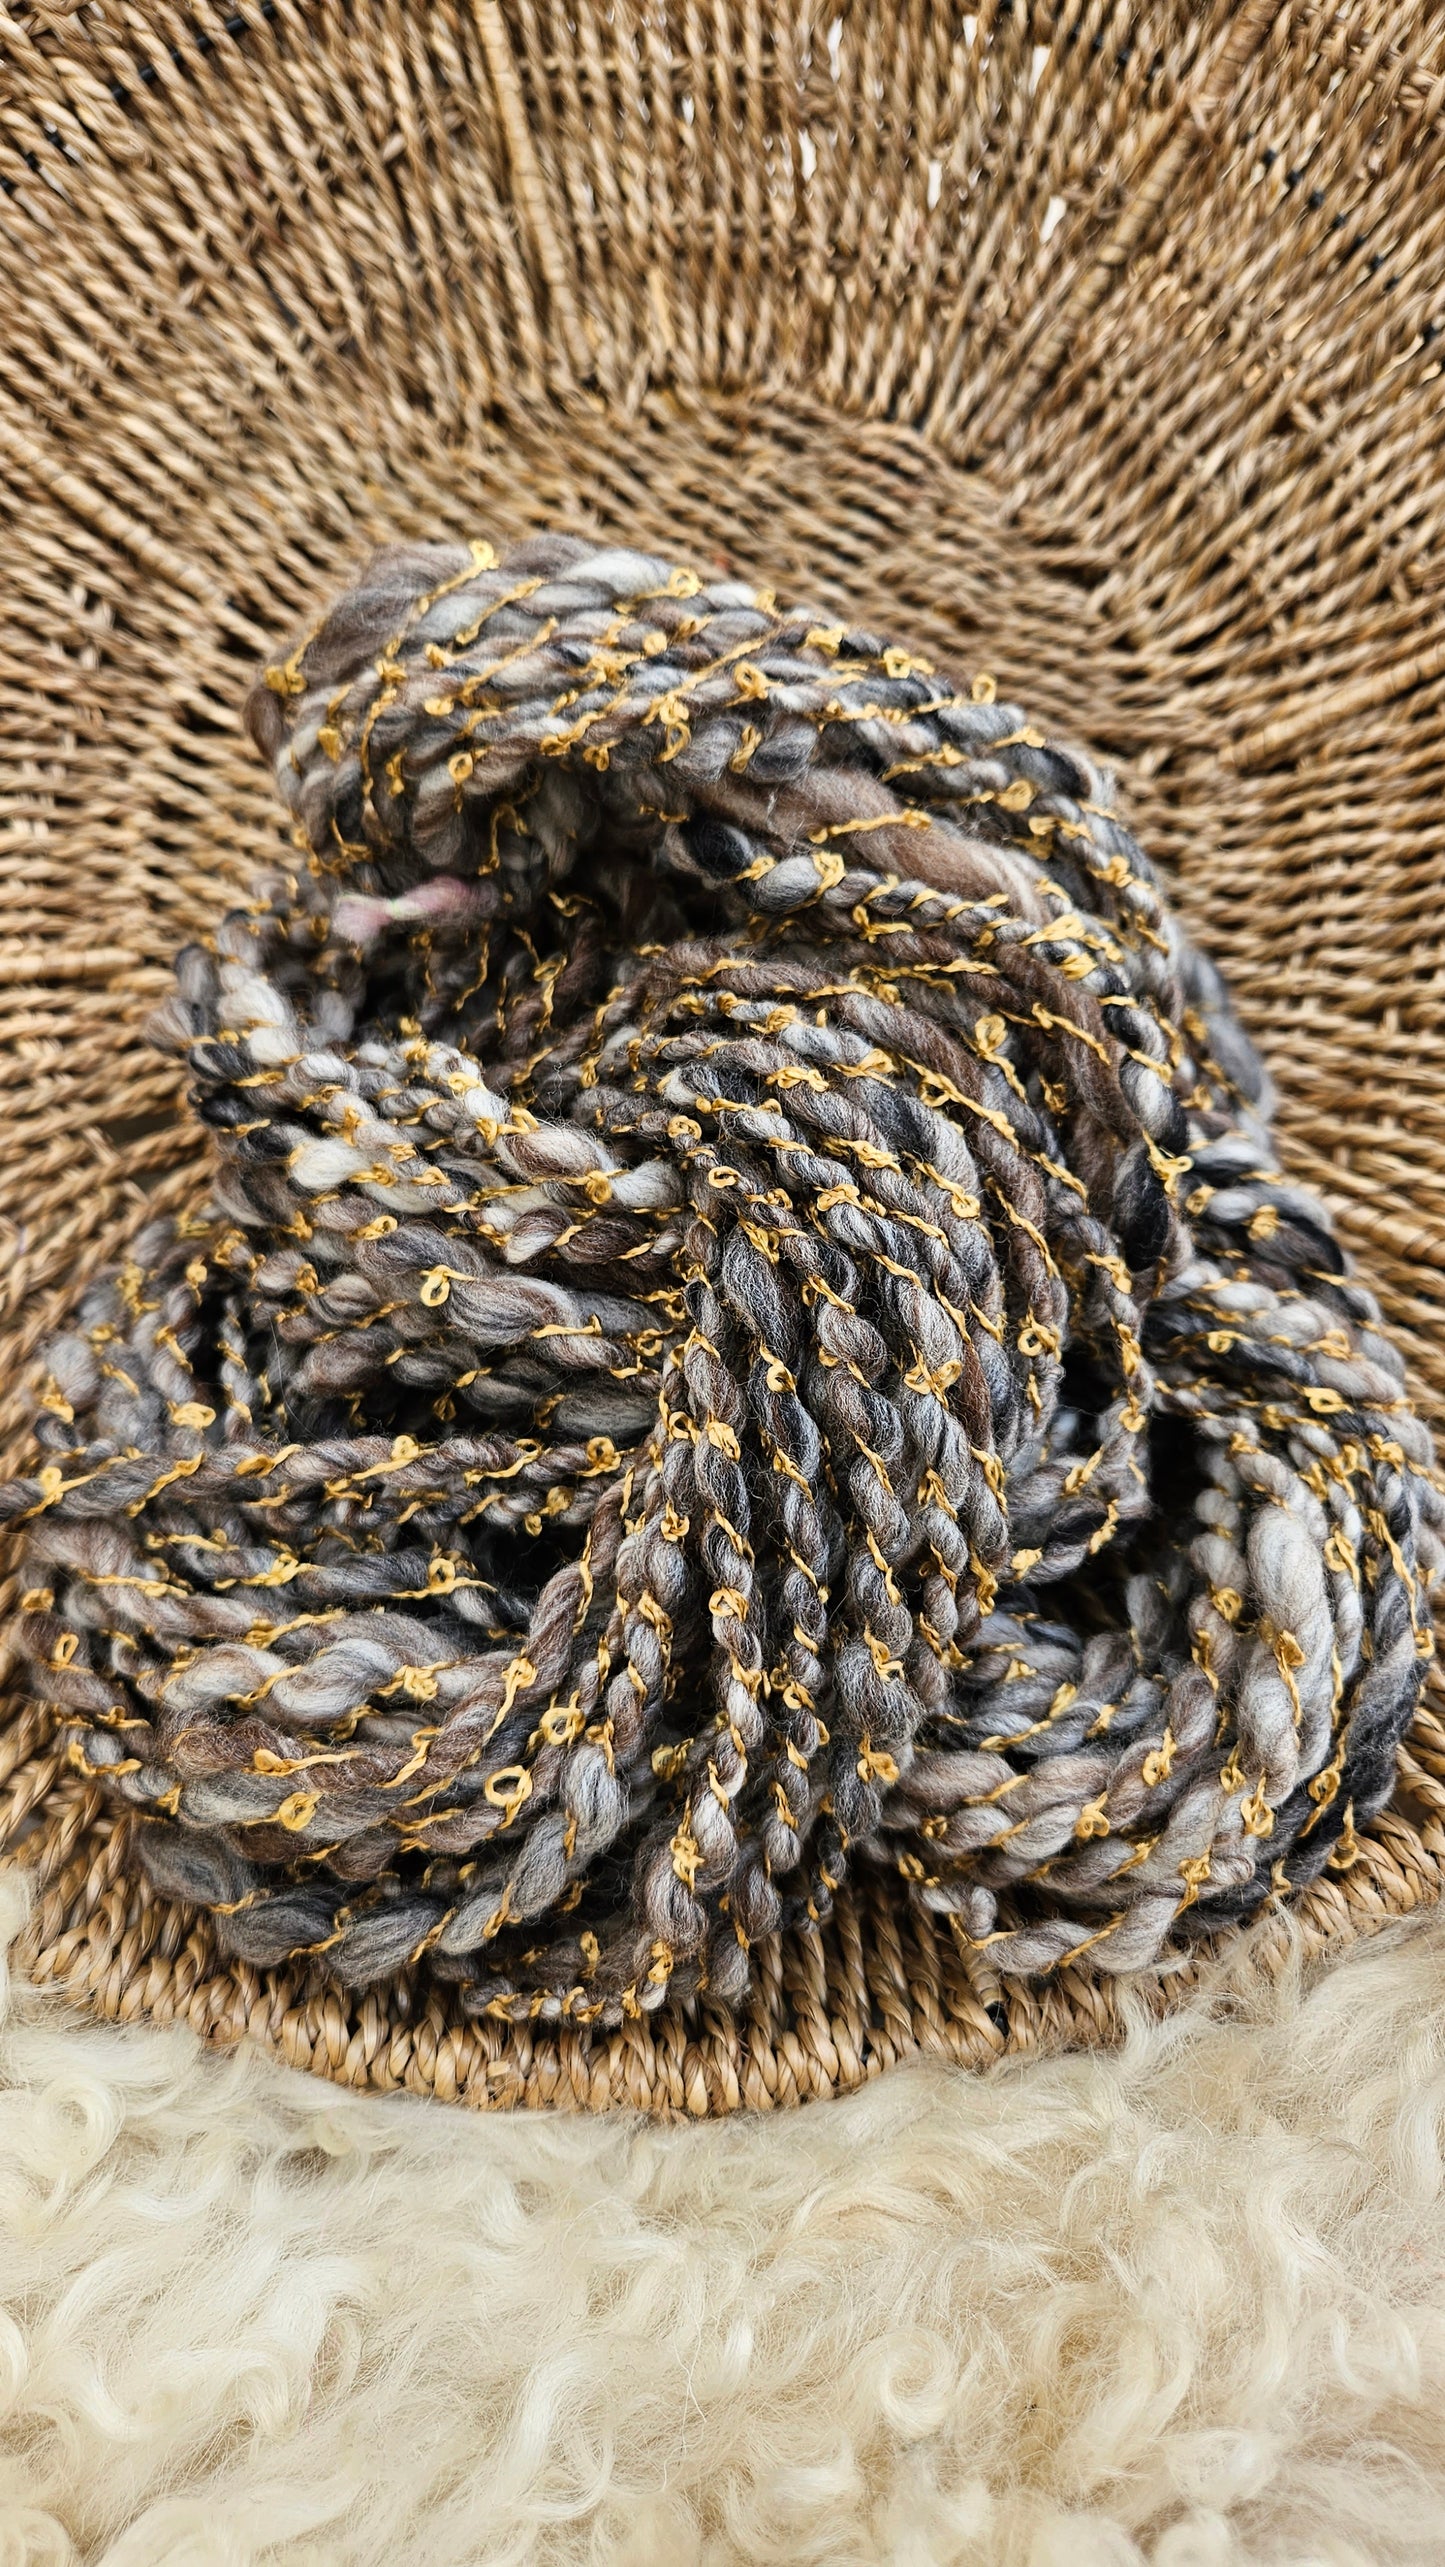 GRAVEYARD OF BURIED HOPES - Handspun Bulky Wool Textured Art Yarn - 24 Yards 3.0 oz